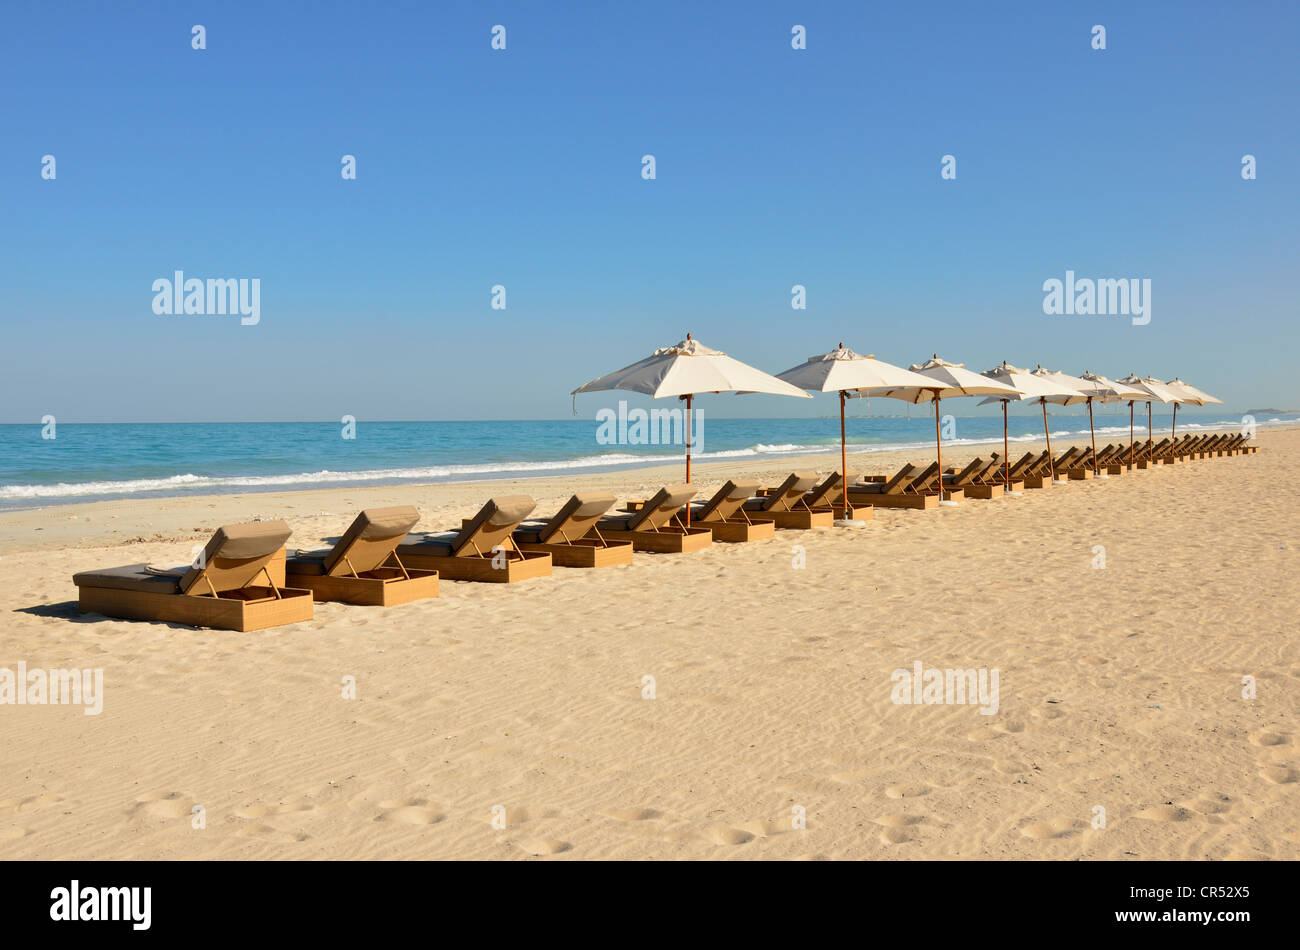 Sunbeds and sunshades on the beach of the Park Hyatt hotel on Saadiyat Island, Abu Dhabi, United Arab Emirates Stock Photo